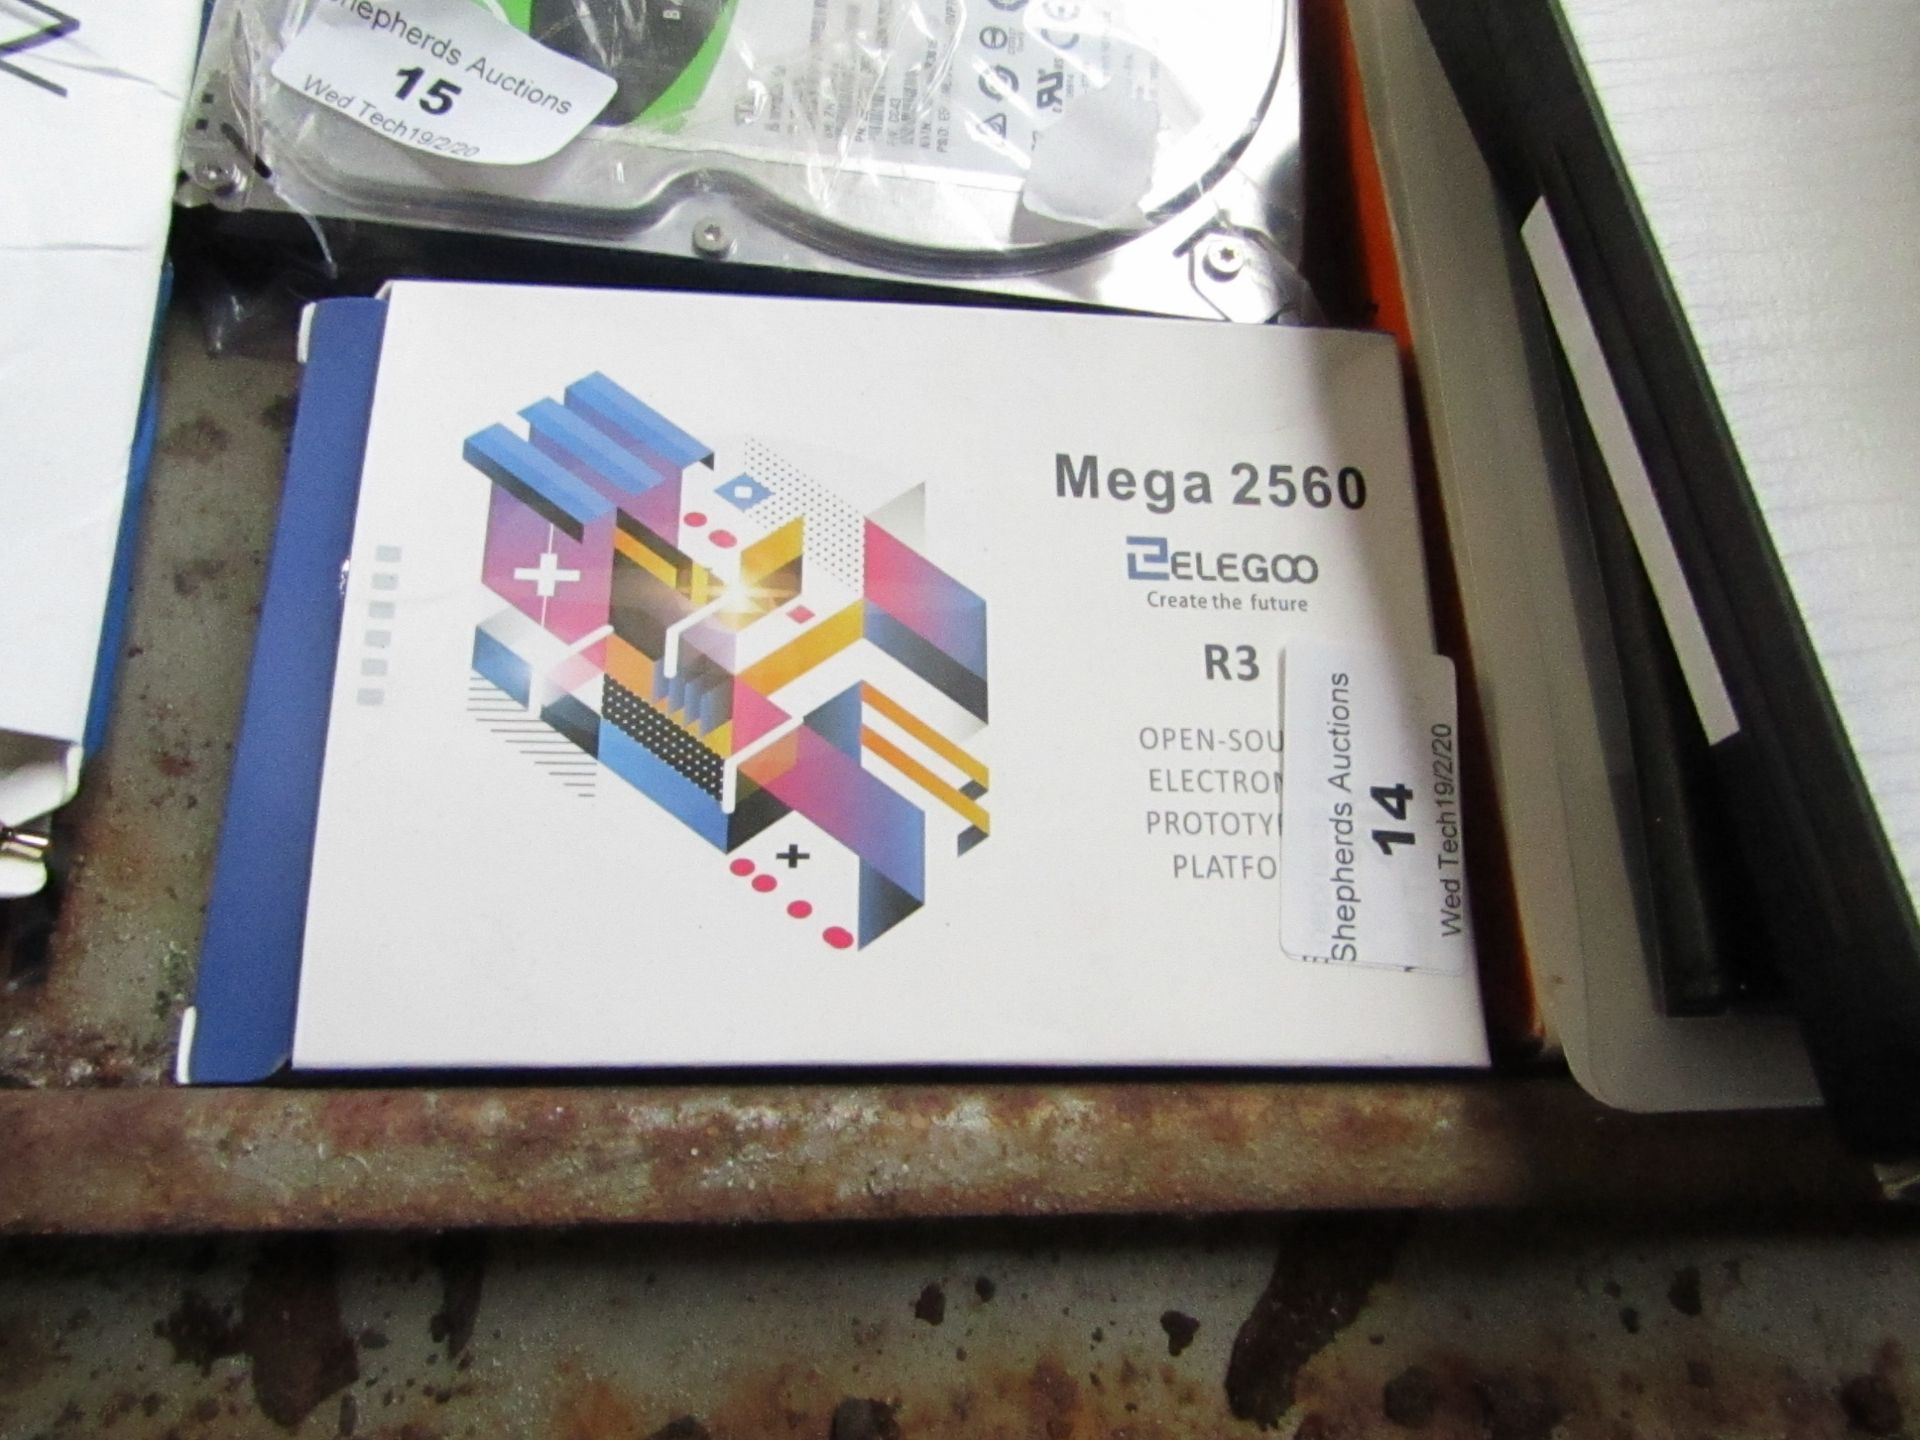 Mega 2560 Elegoo open source electronics prototyping platform, untested and boxed.